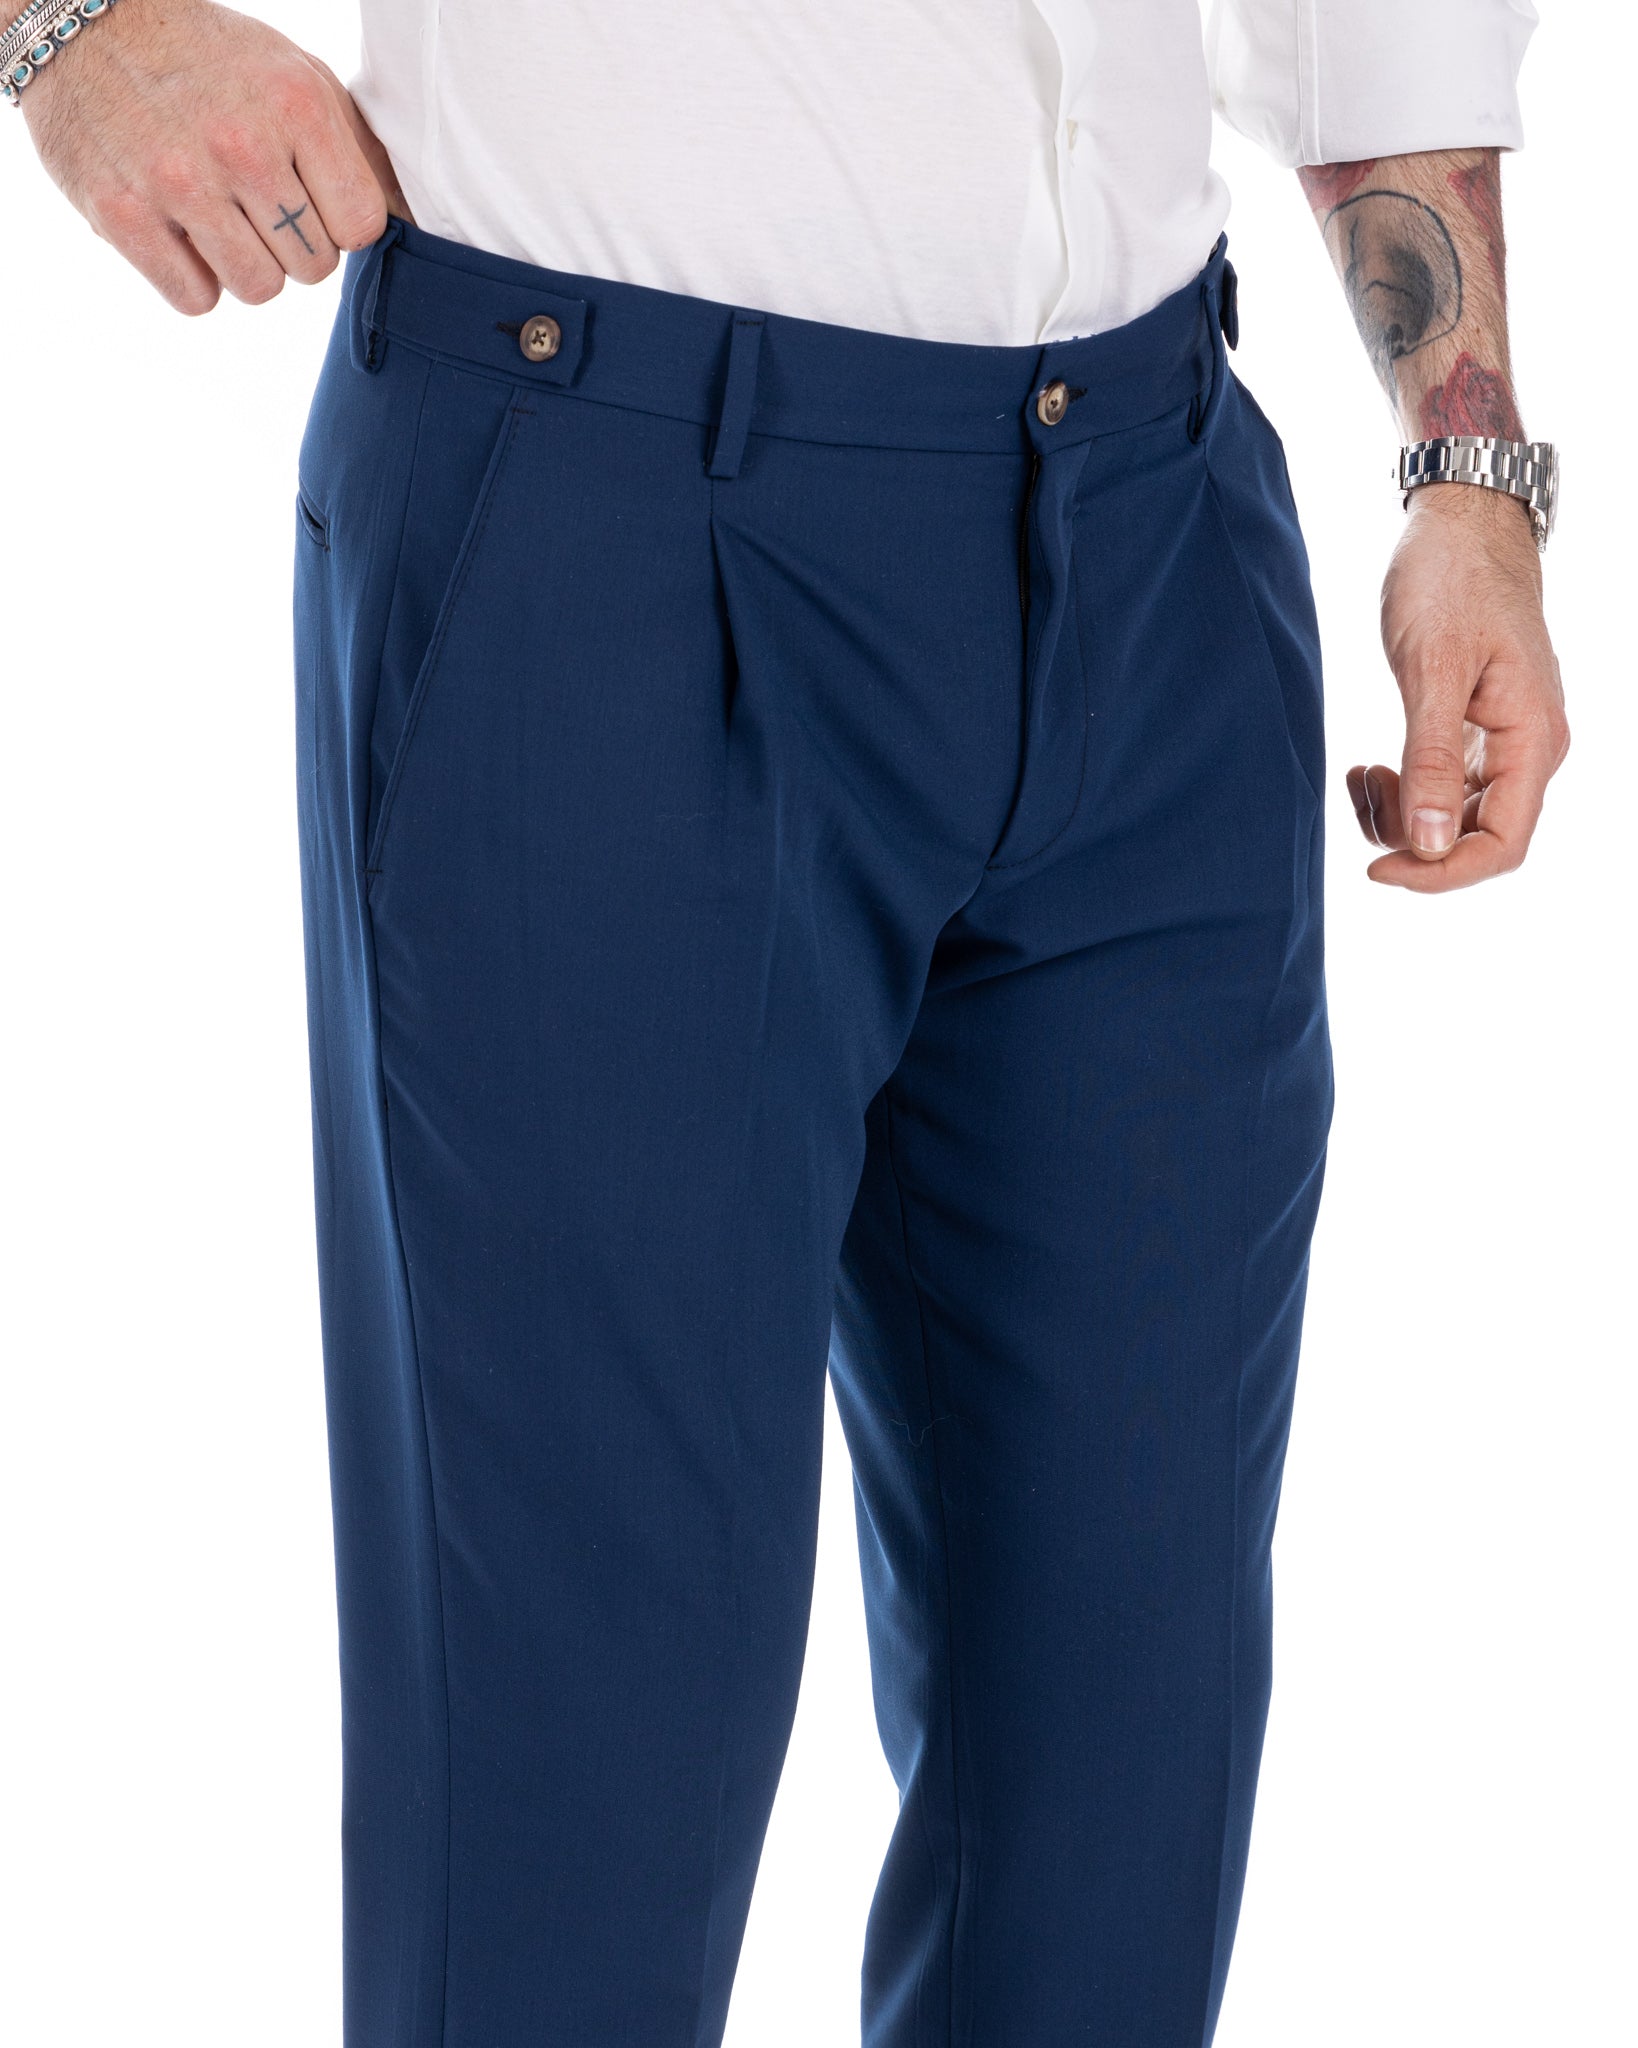 Milano - pantalon bluette basique